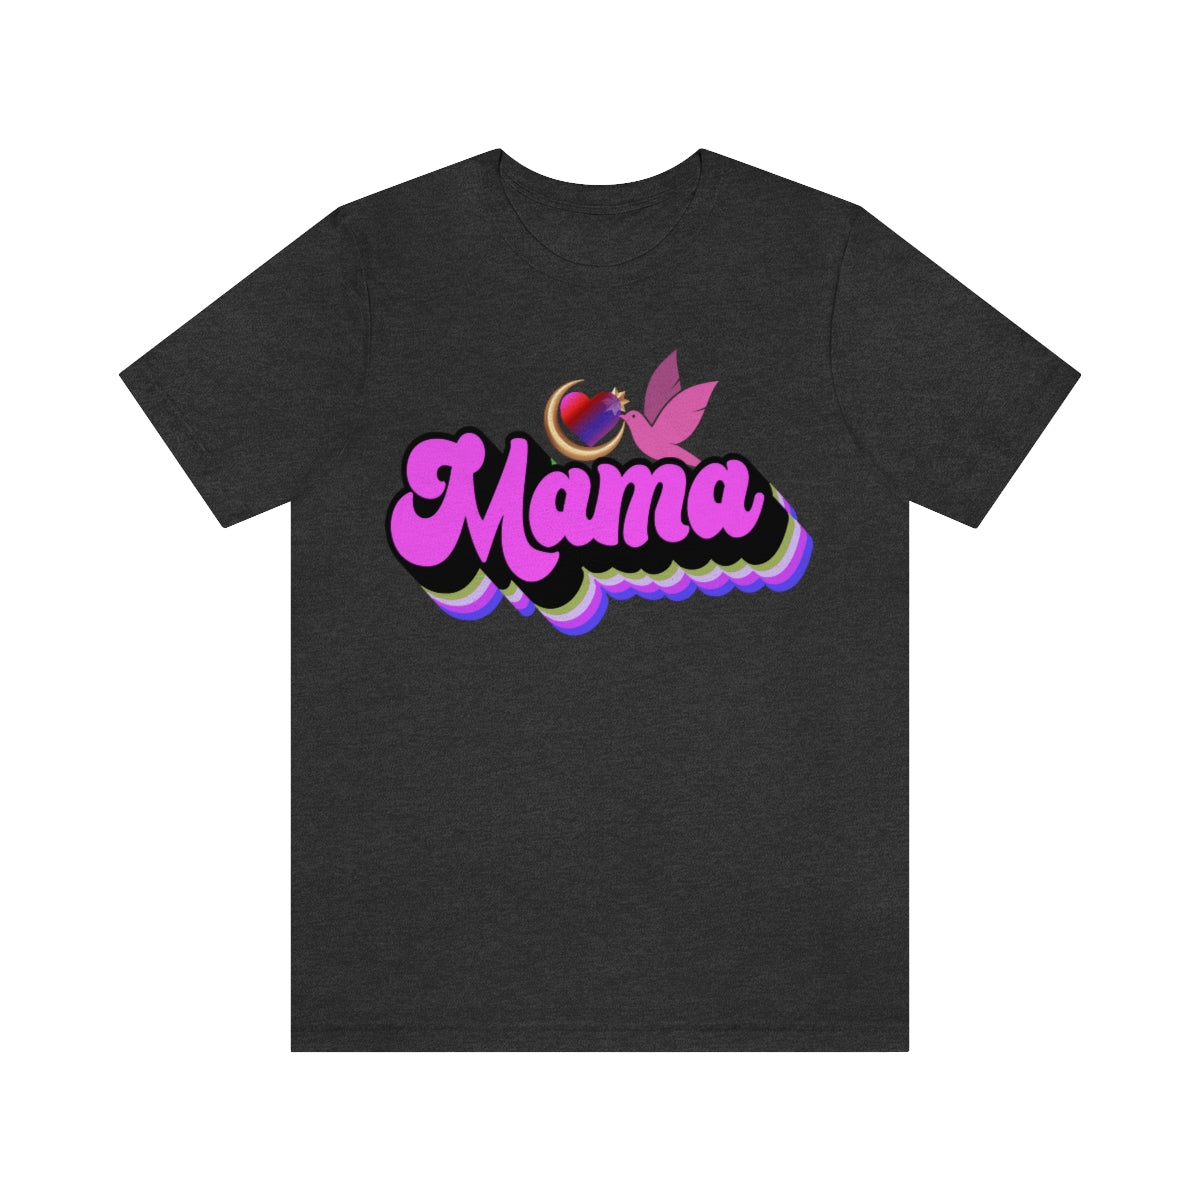 Mama - Shirt